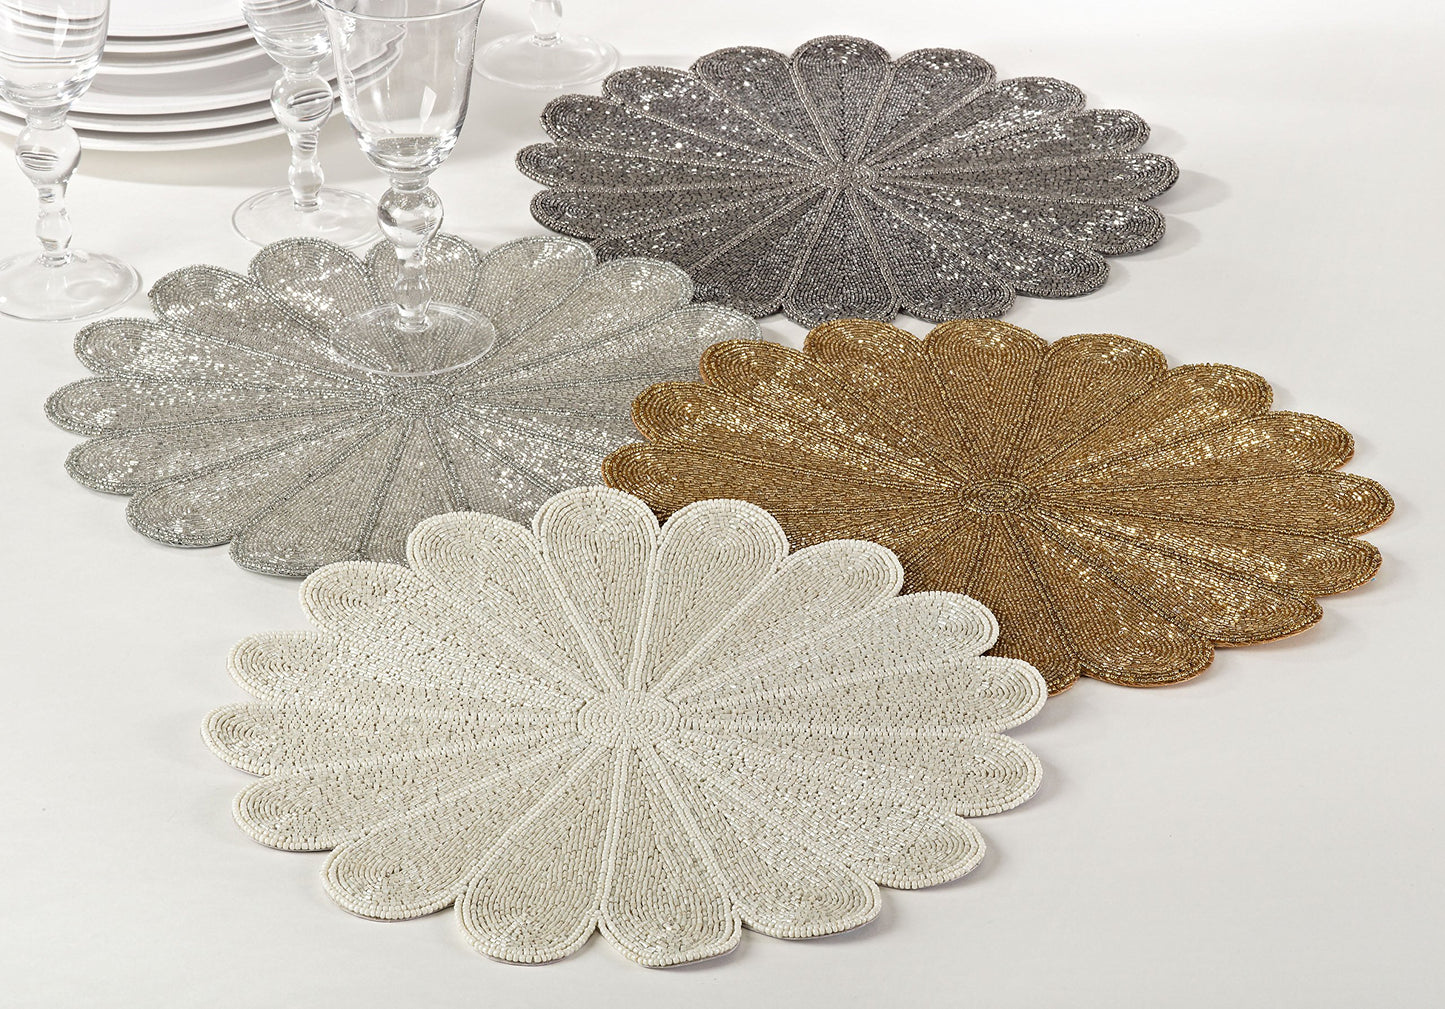 Fennco Styles Flower Design Handmade Beaded 15-inch Round Placemat - 1-Piece